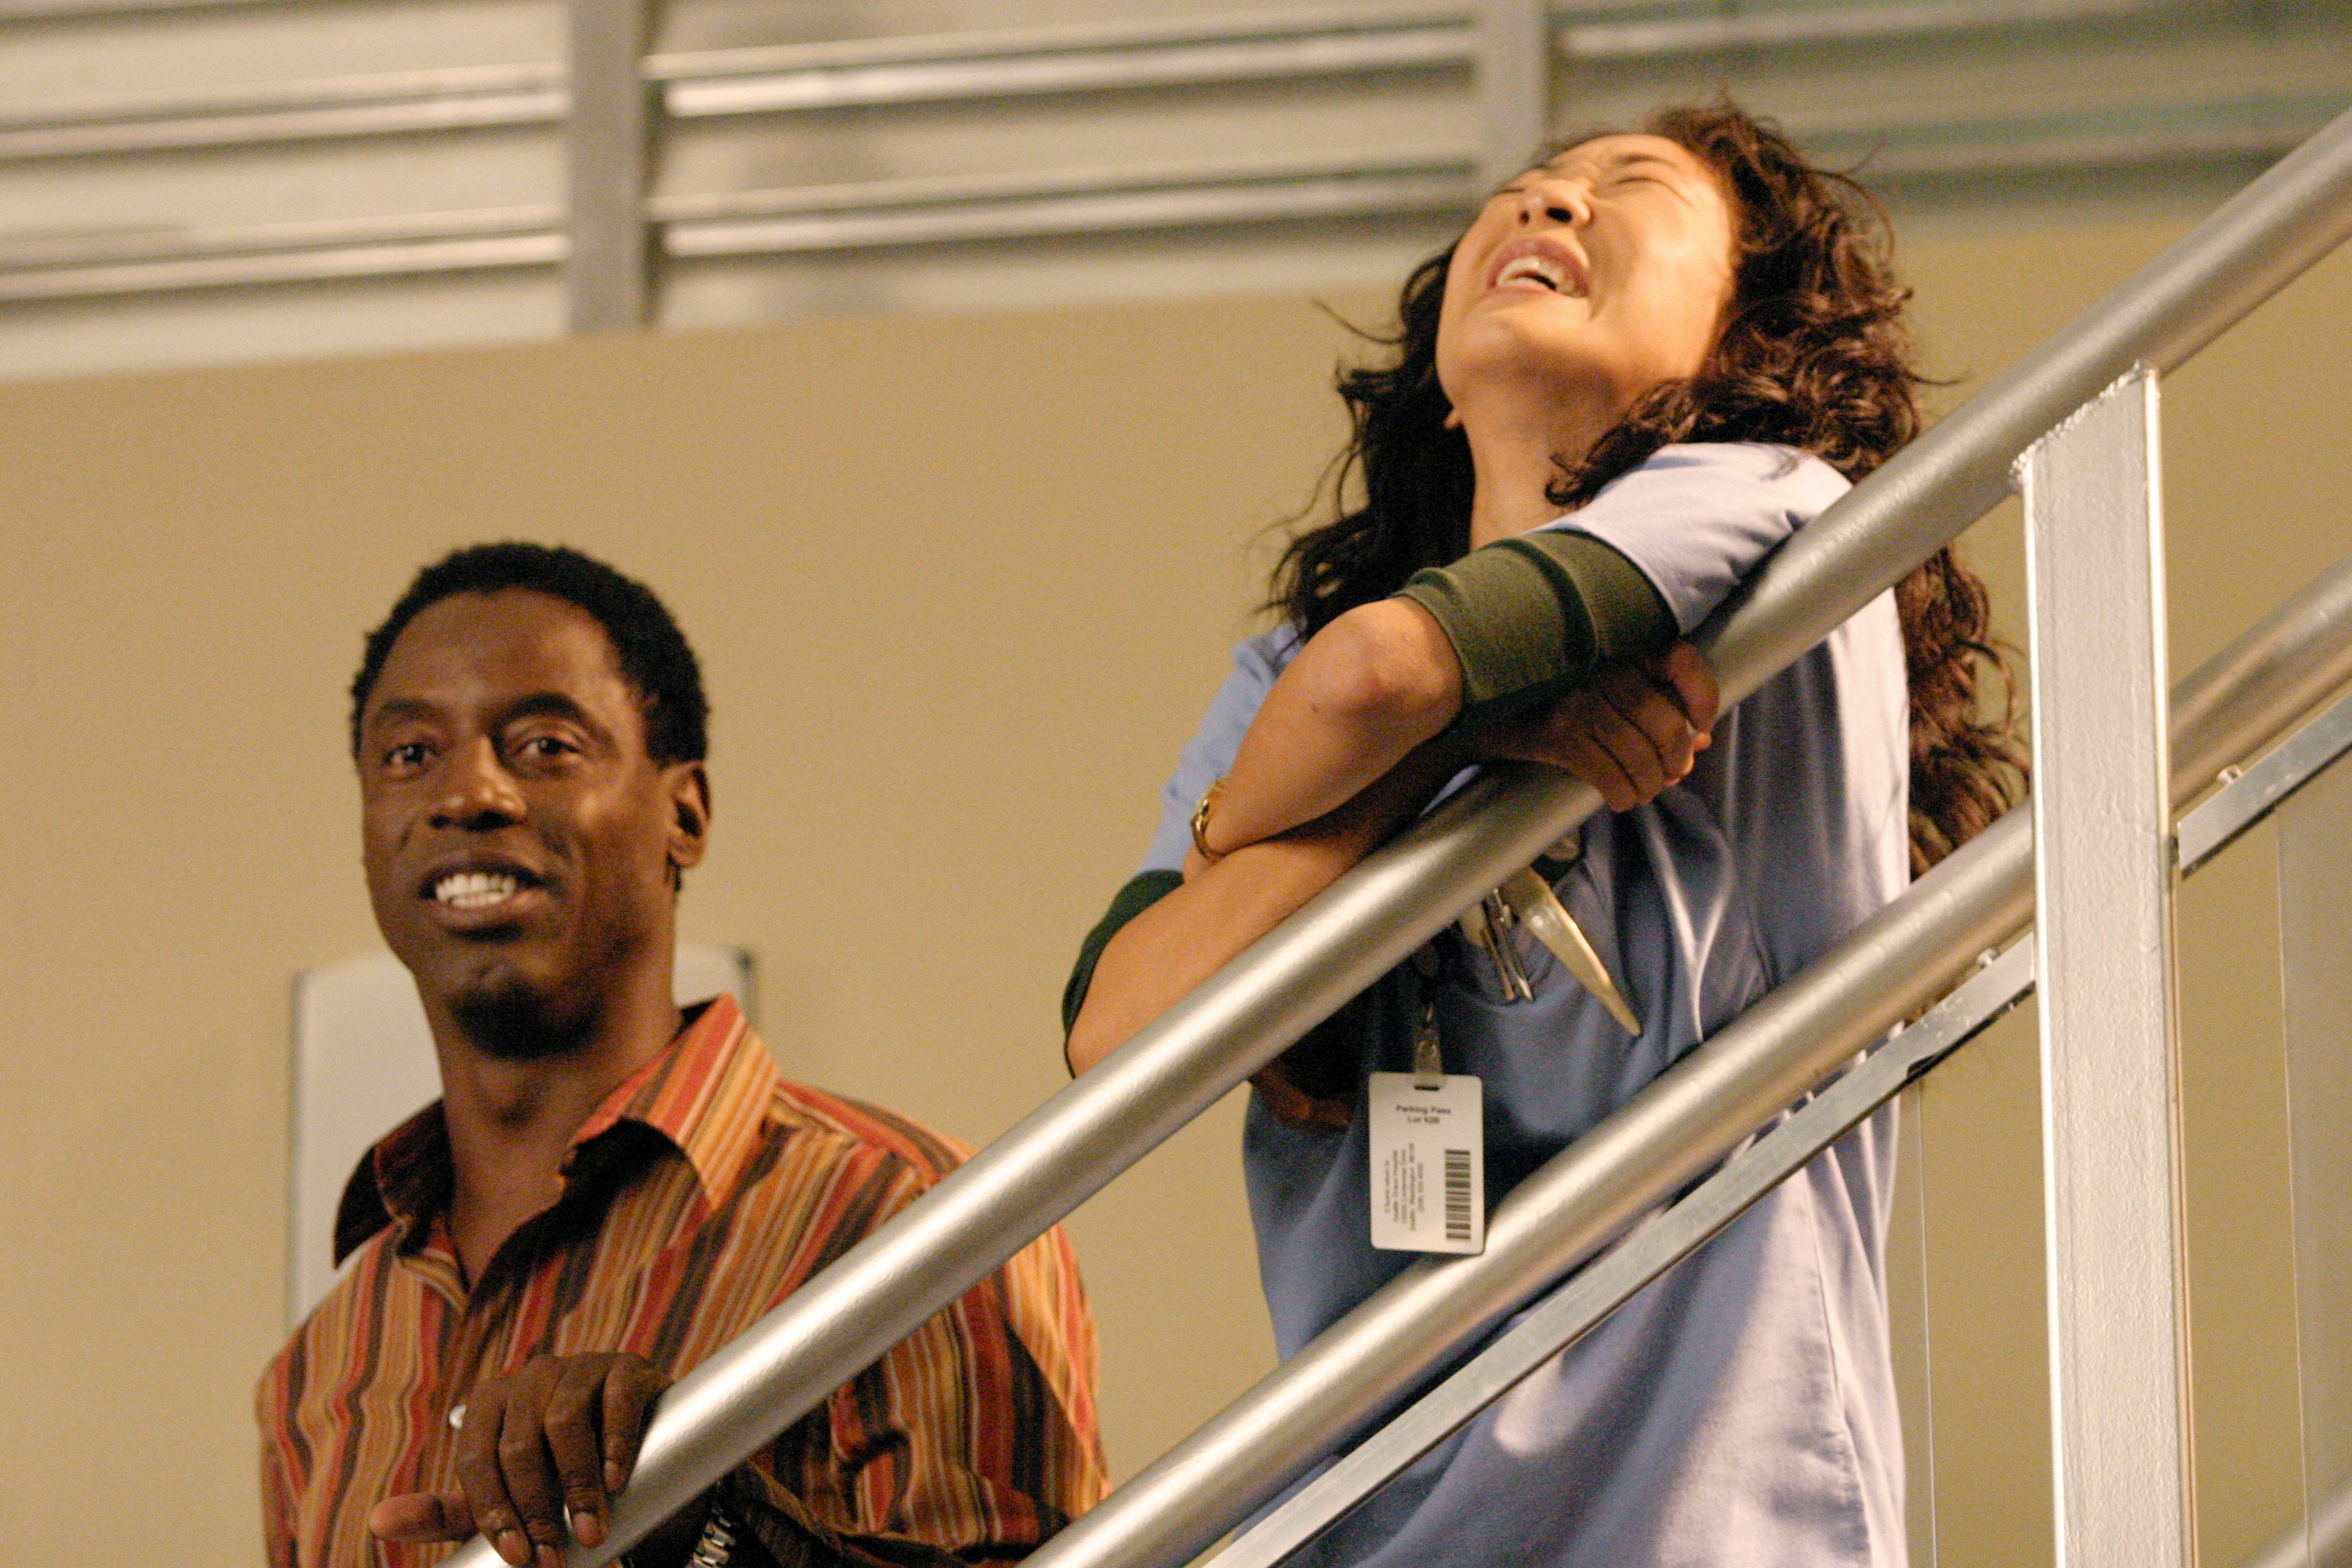 'Grey's Anatomy' stars Sandra Oh as Cristina Yang and Isaiah Washington as Preston Burke laughing during a scene.